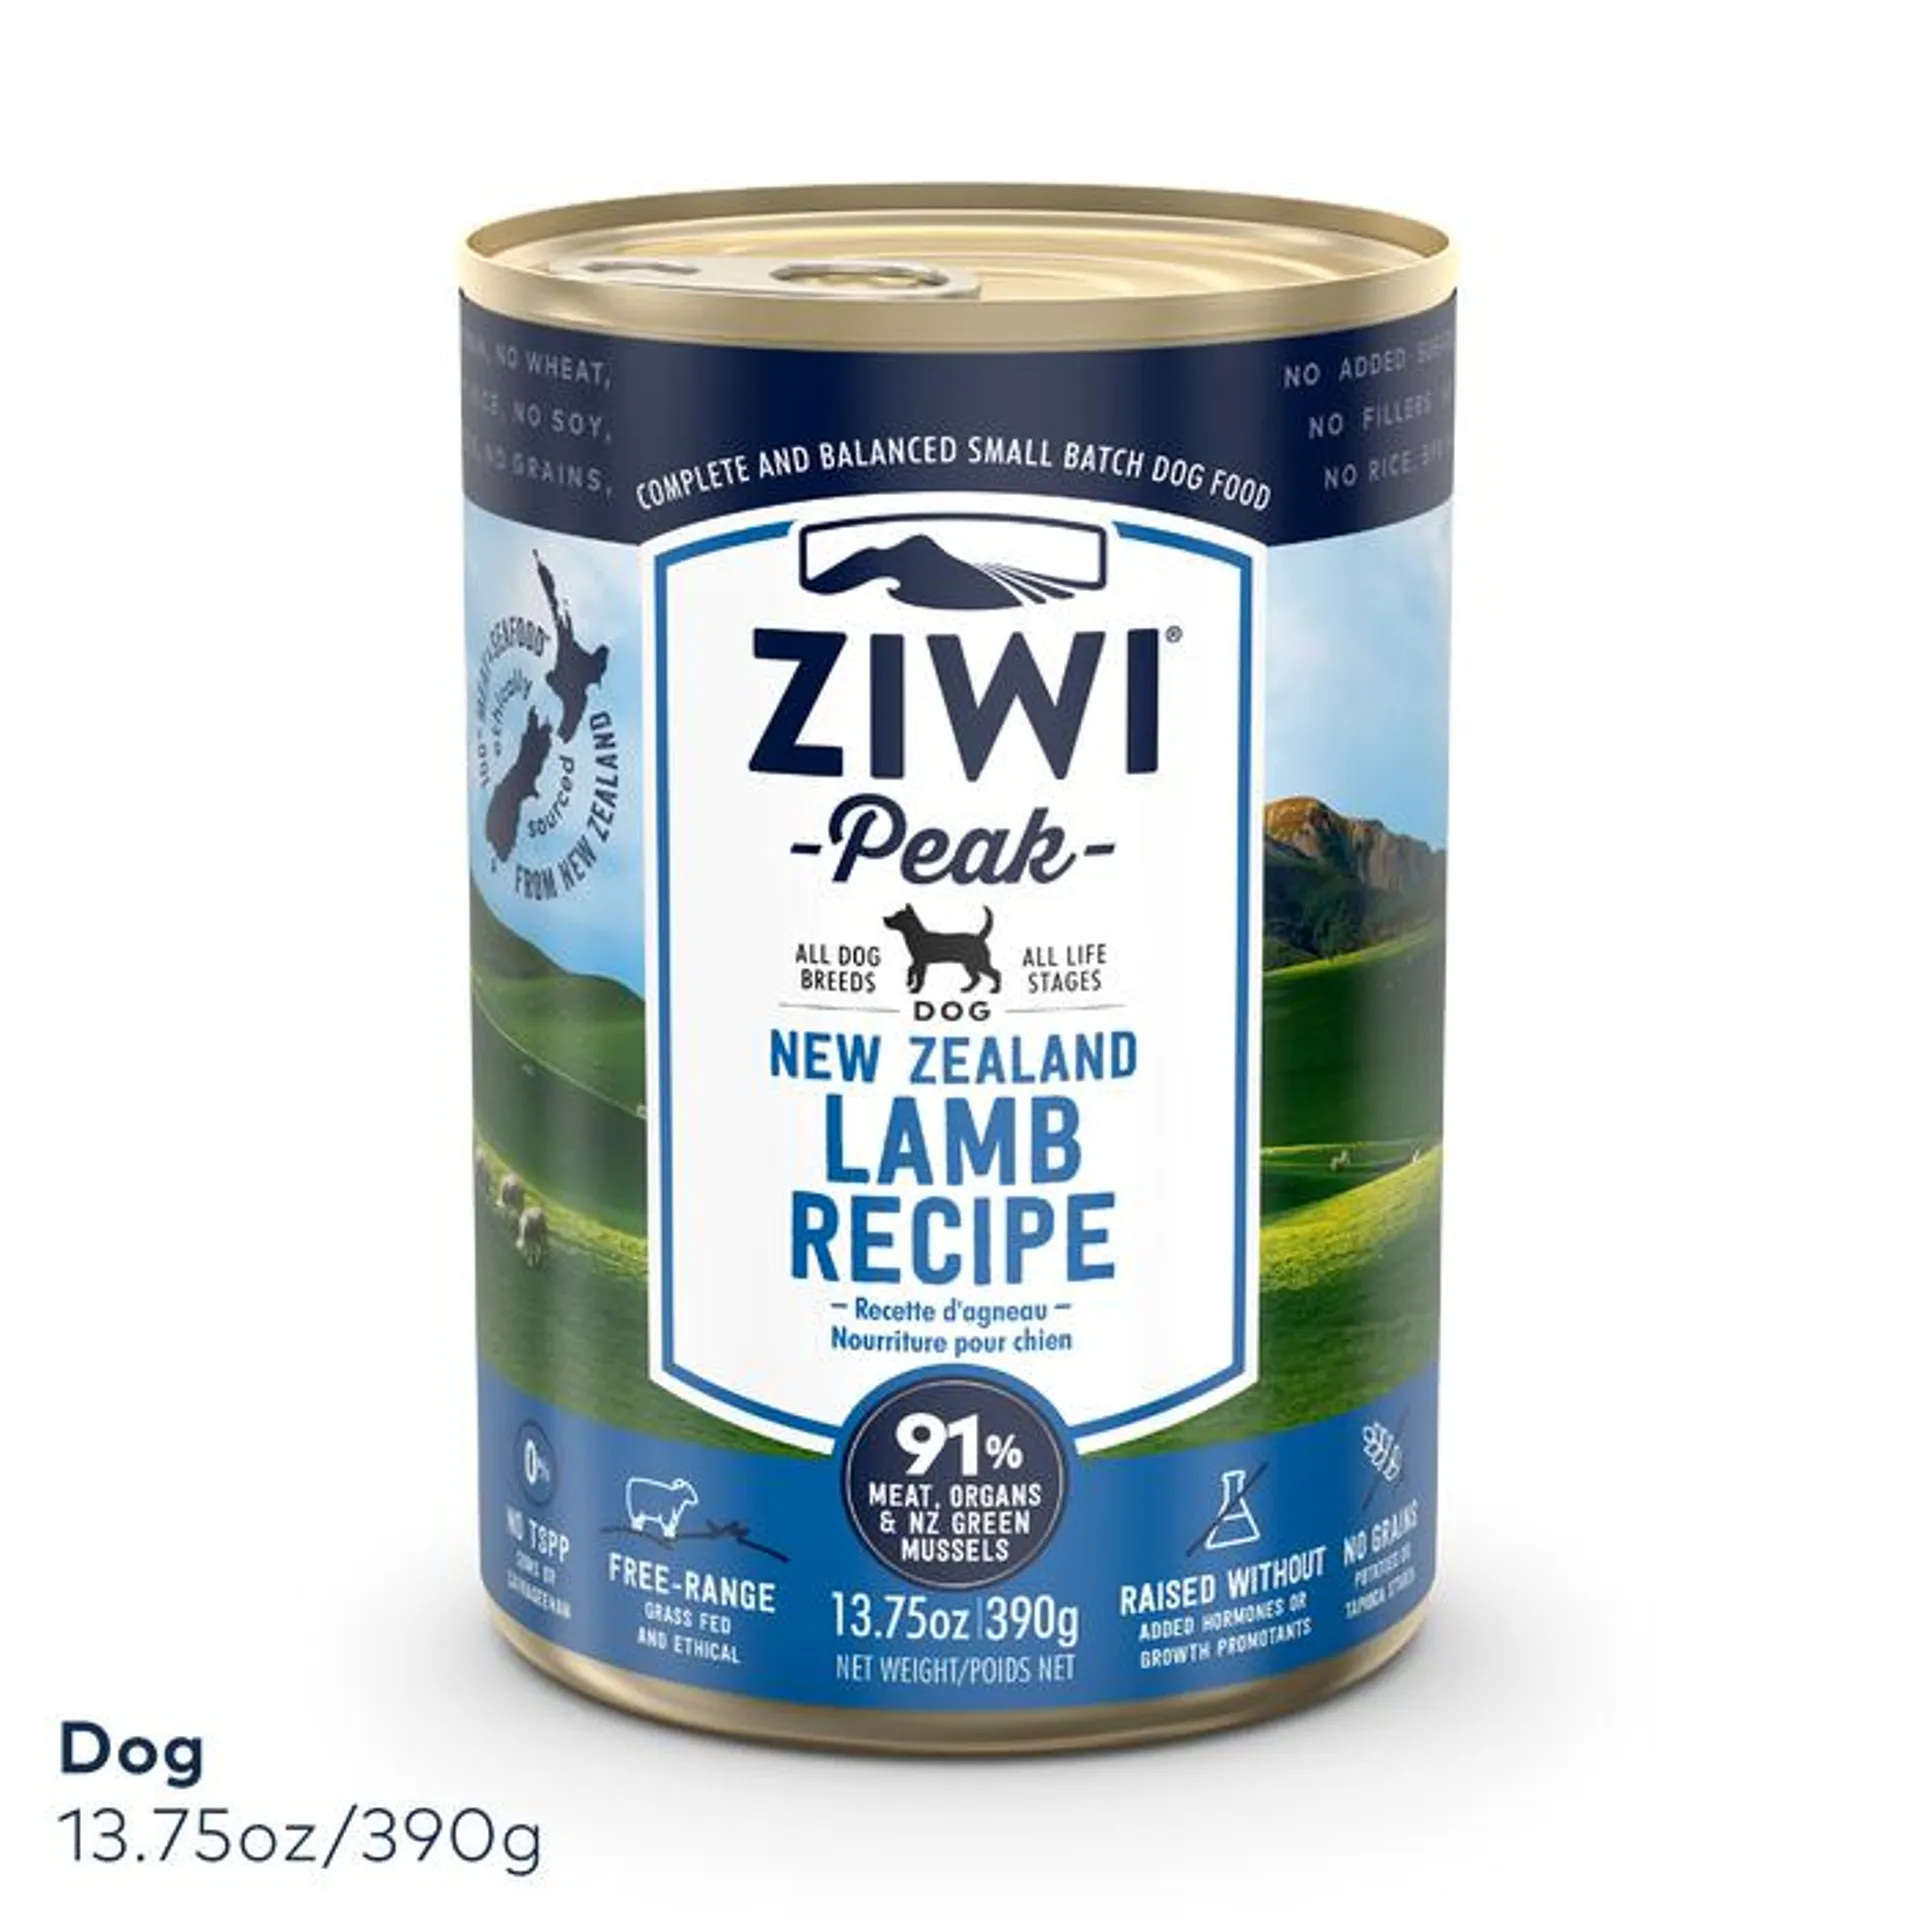 Ziwi Peak Daily-dog Cuisine Lamb 390g